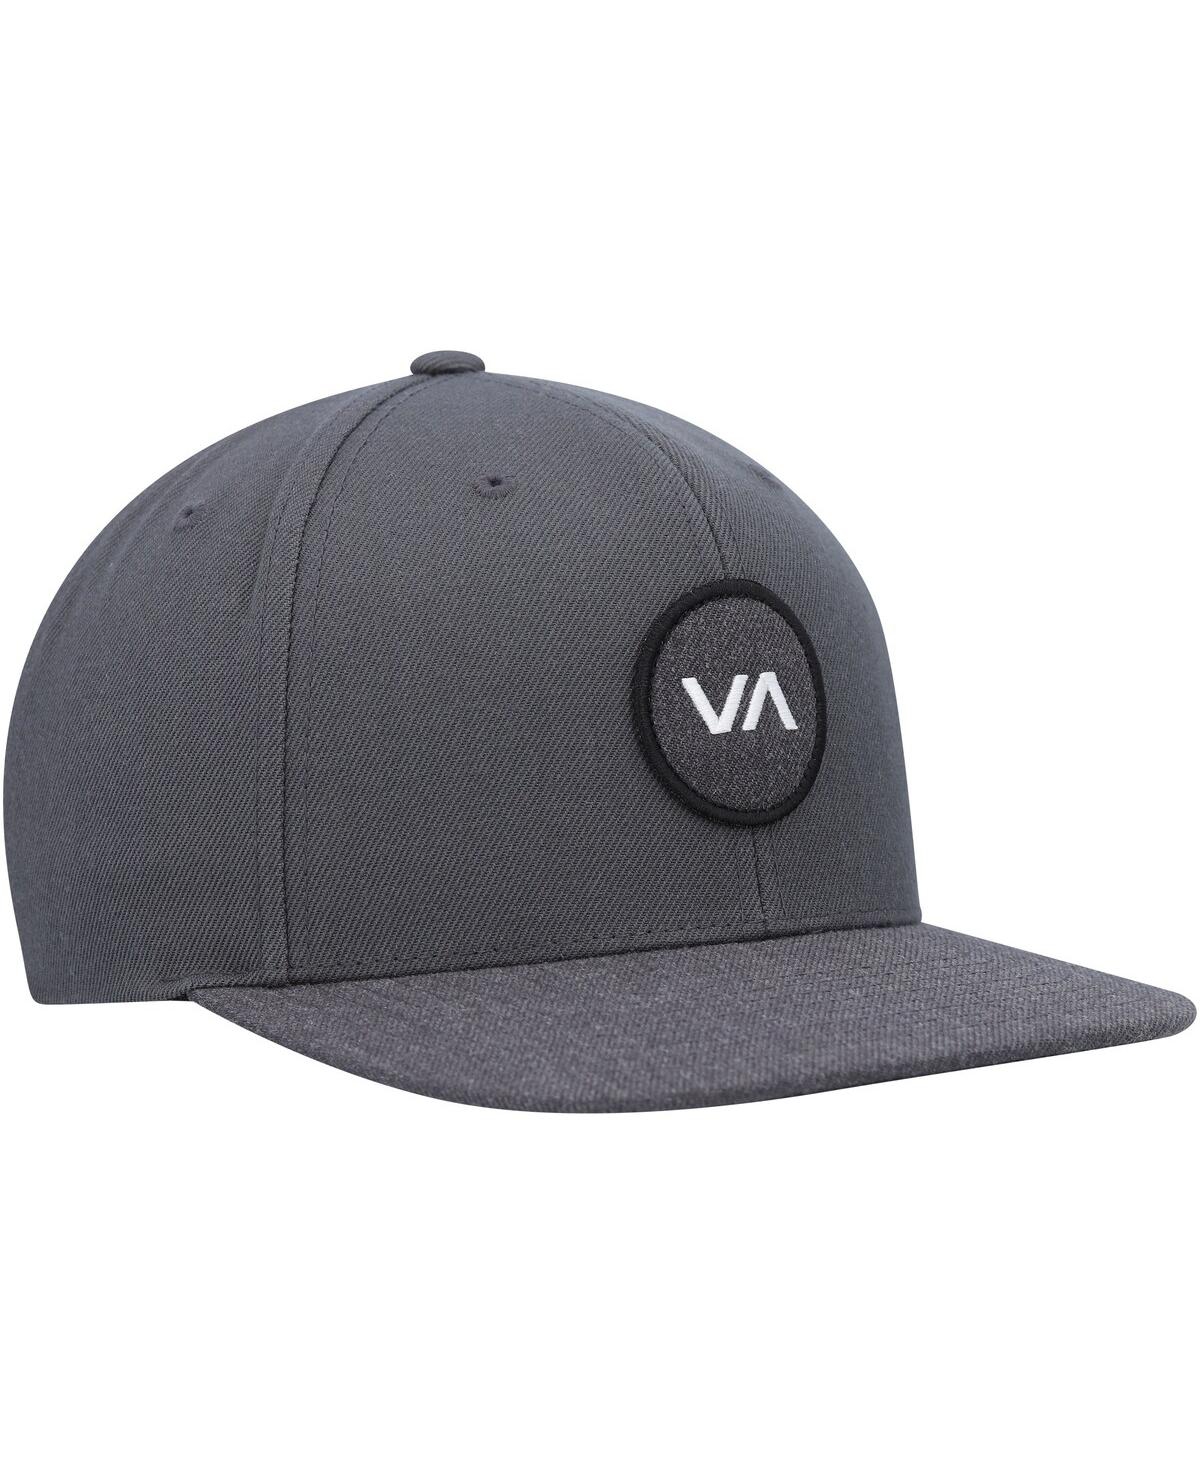 Shop Rvca Men's  Graphite Va Patch Snapback Hat